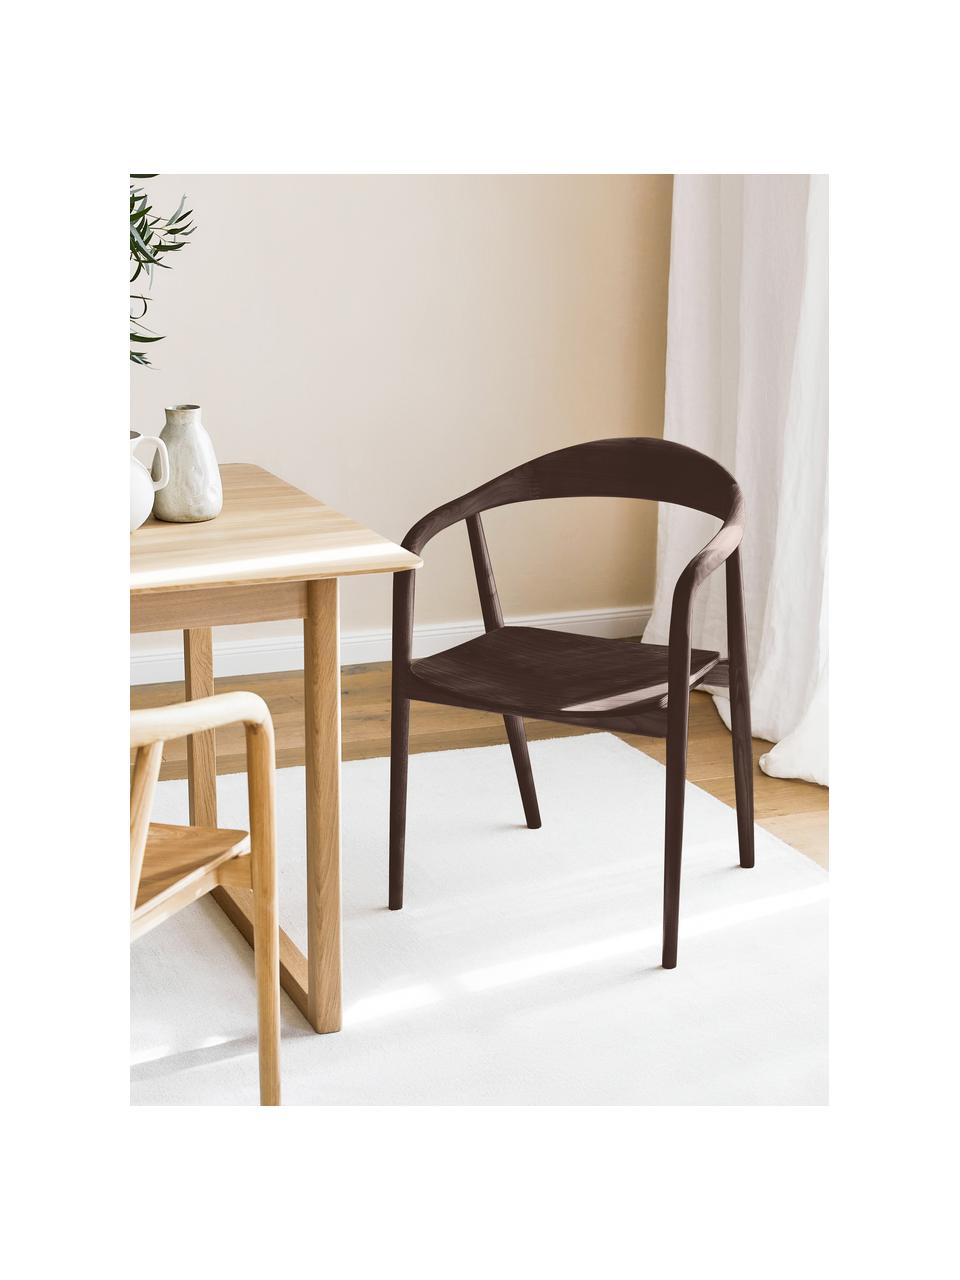 Houten fauteuil Angelina, Essenhout, FSC-gecertificeerd, gelakt, multiplex, FSC-gecertificeerd, Walnoothoutfineer, B 57 x H 80 cm